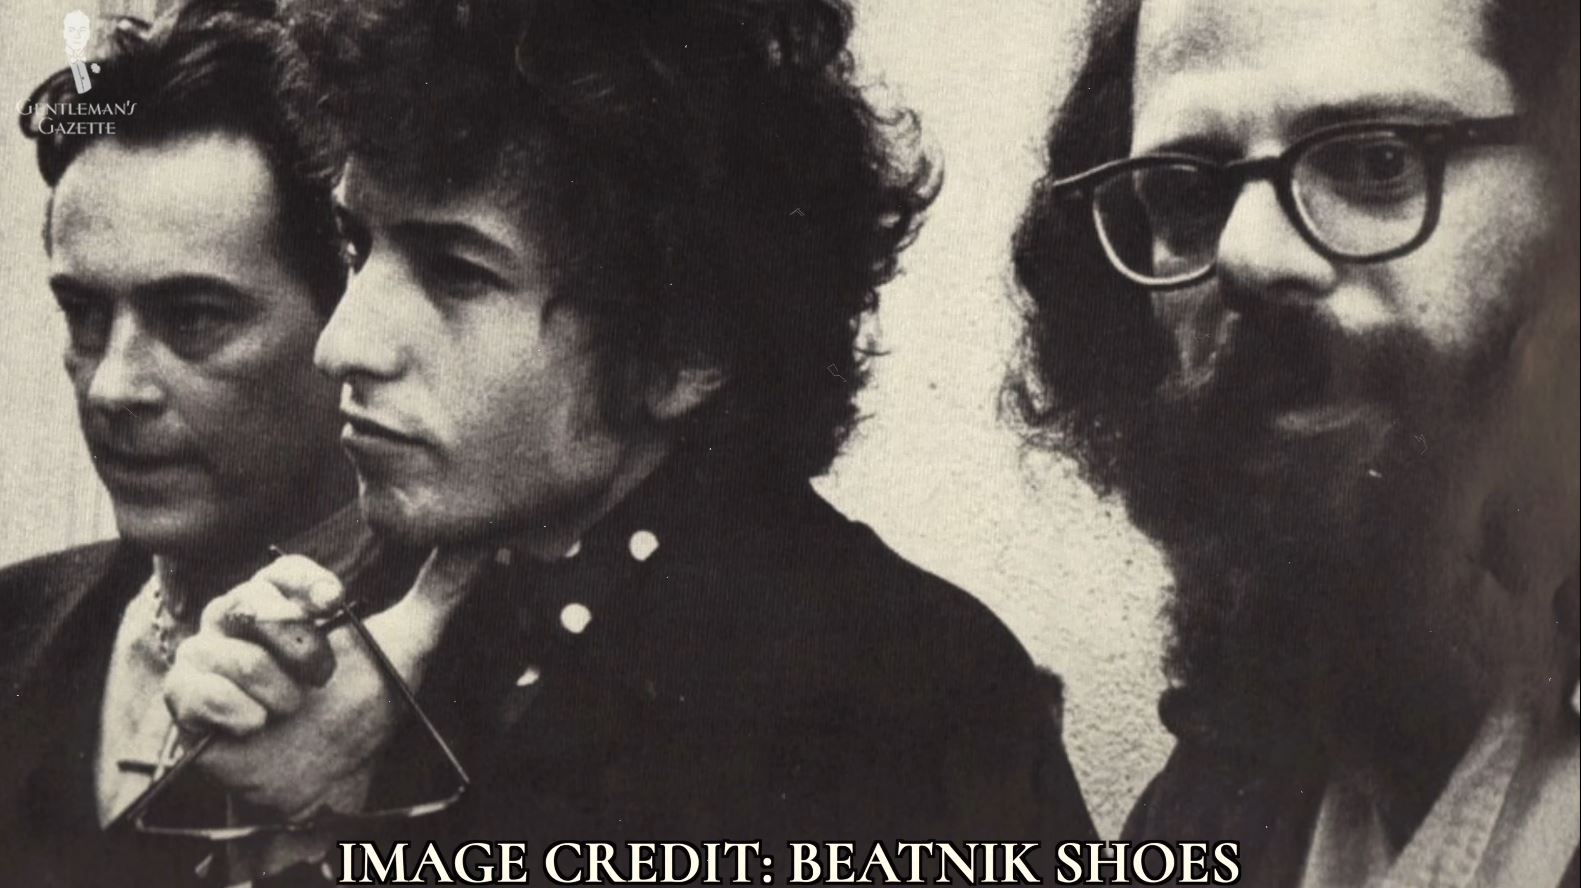 Bob Dylan & The Hawks in 1965 [Image Credit: Beatnik Shoes]